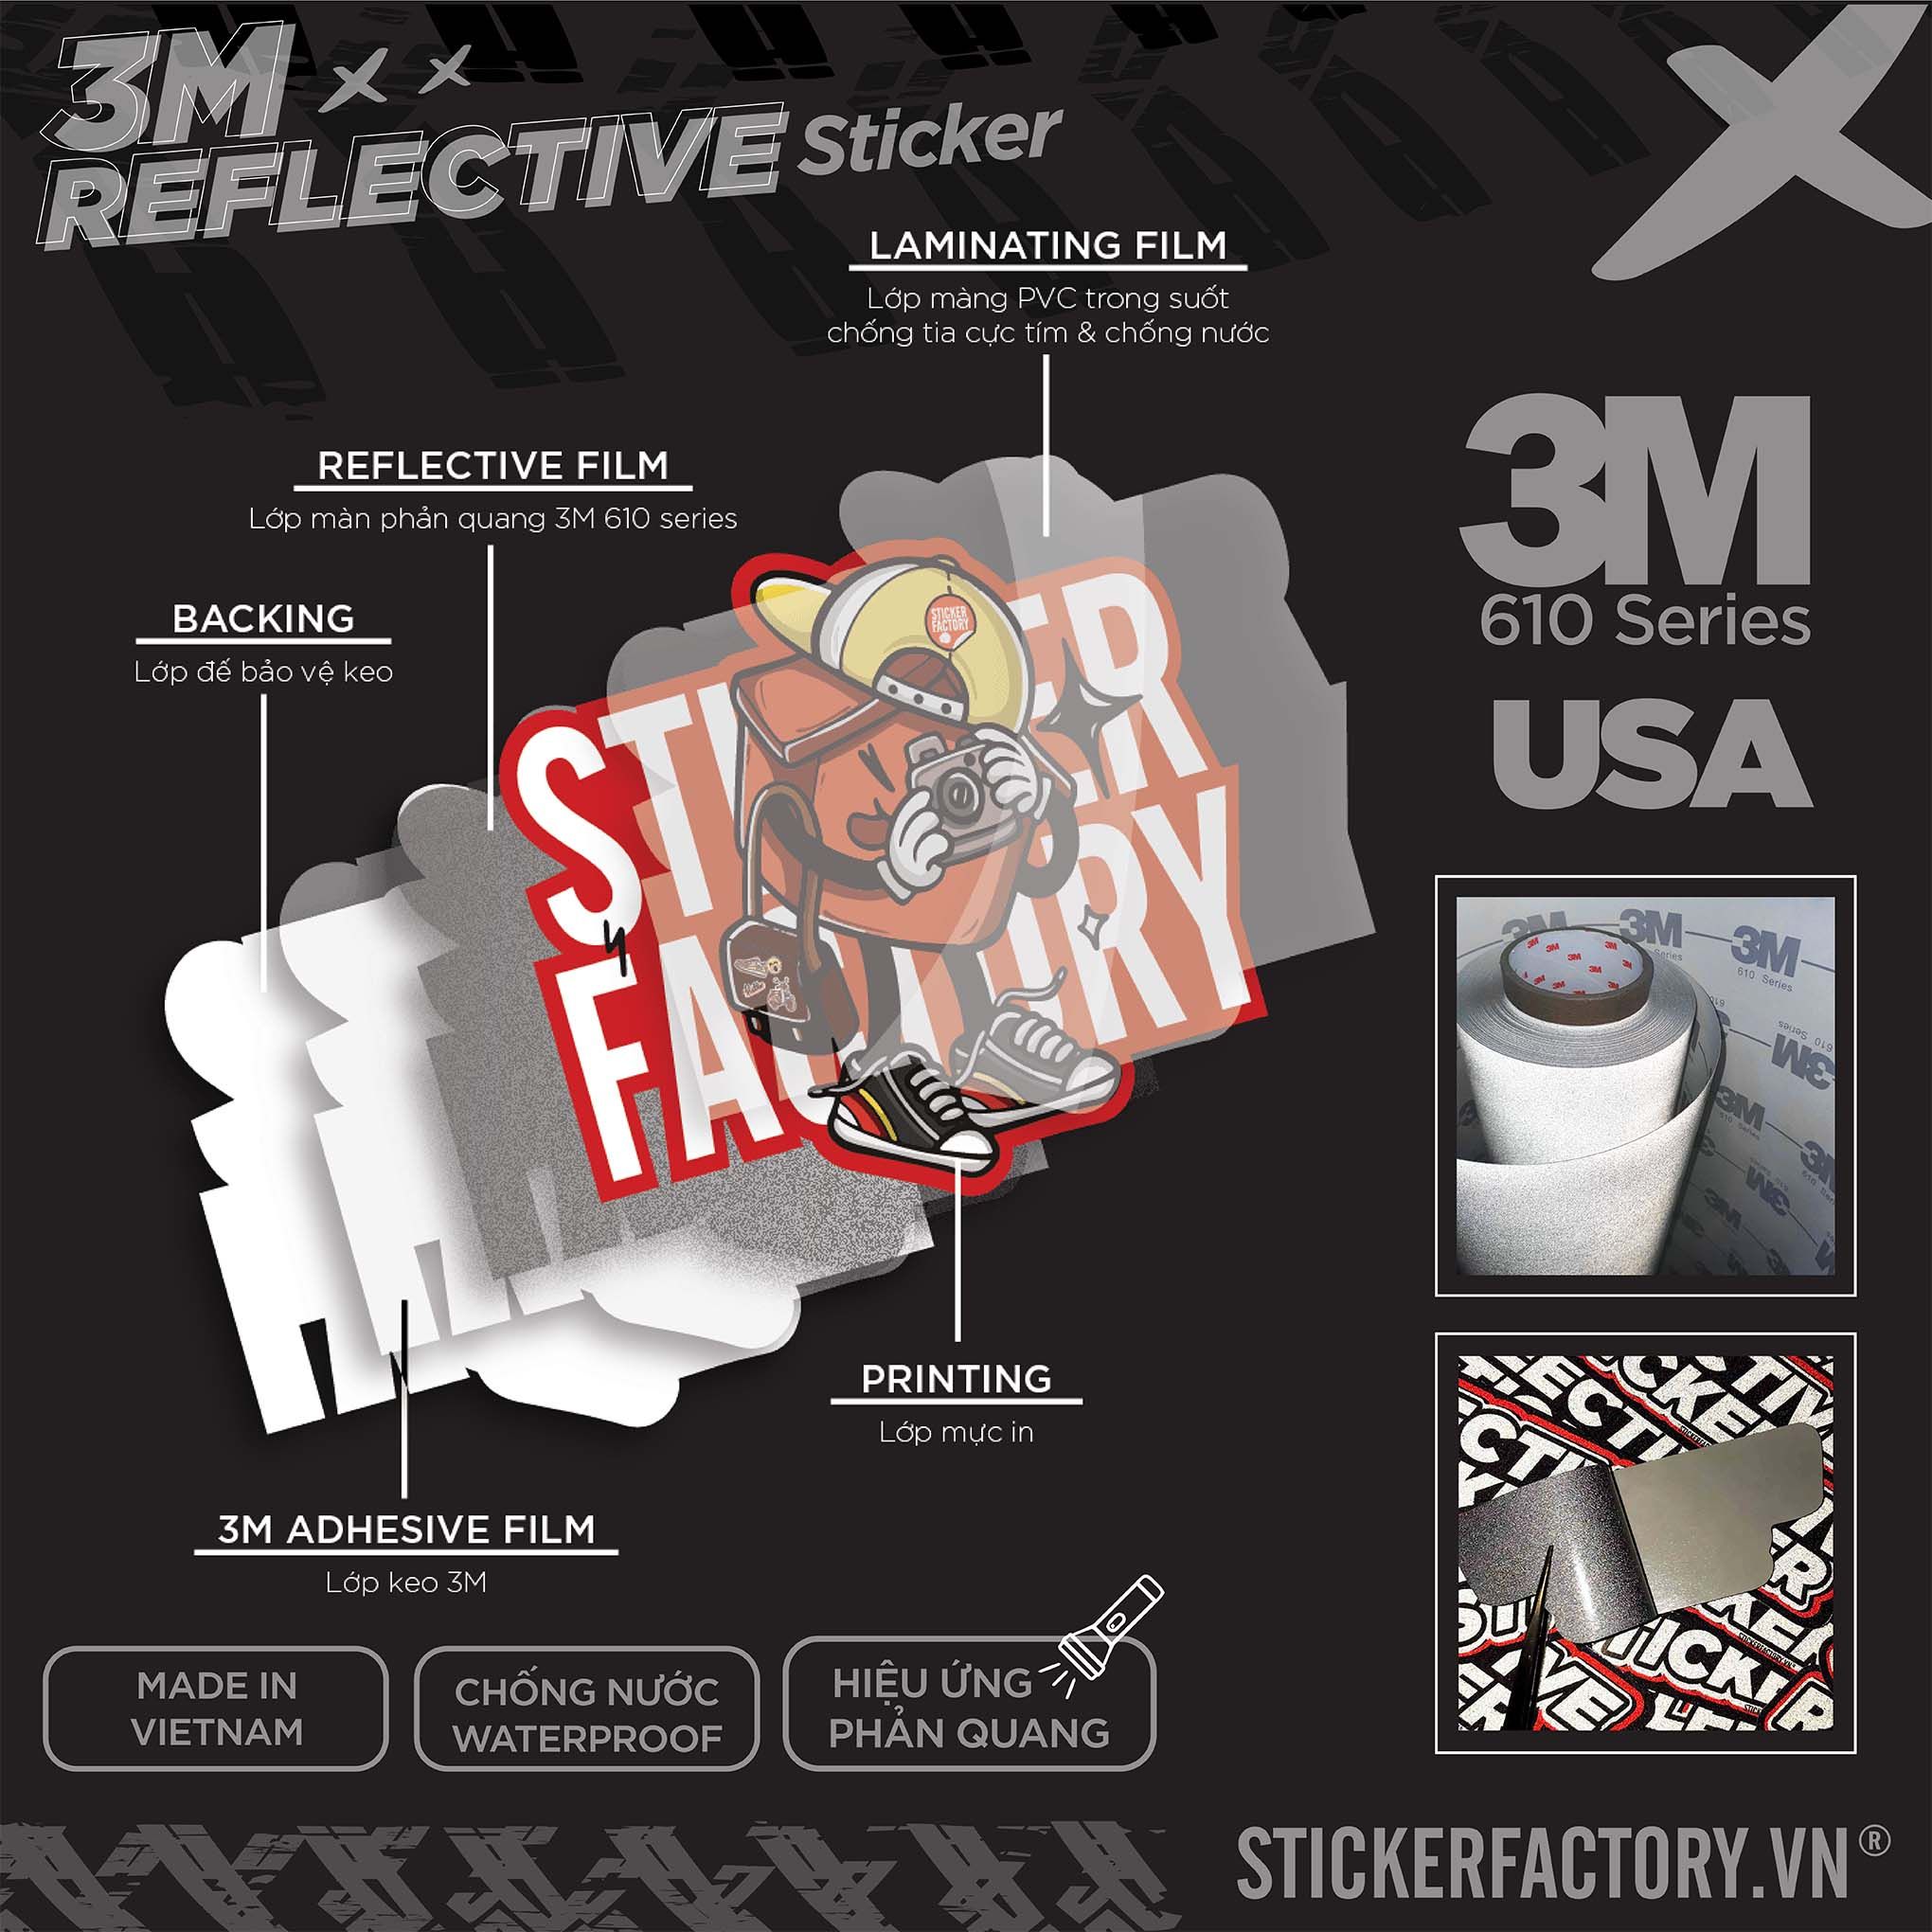 ROCK N ROLL 3M - Reflective Sticker Die-cut